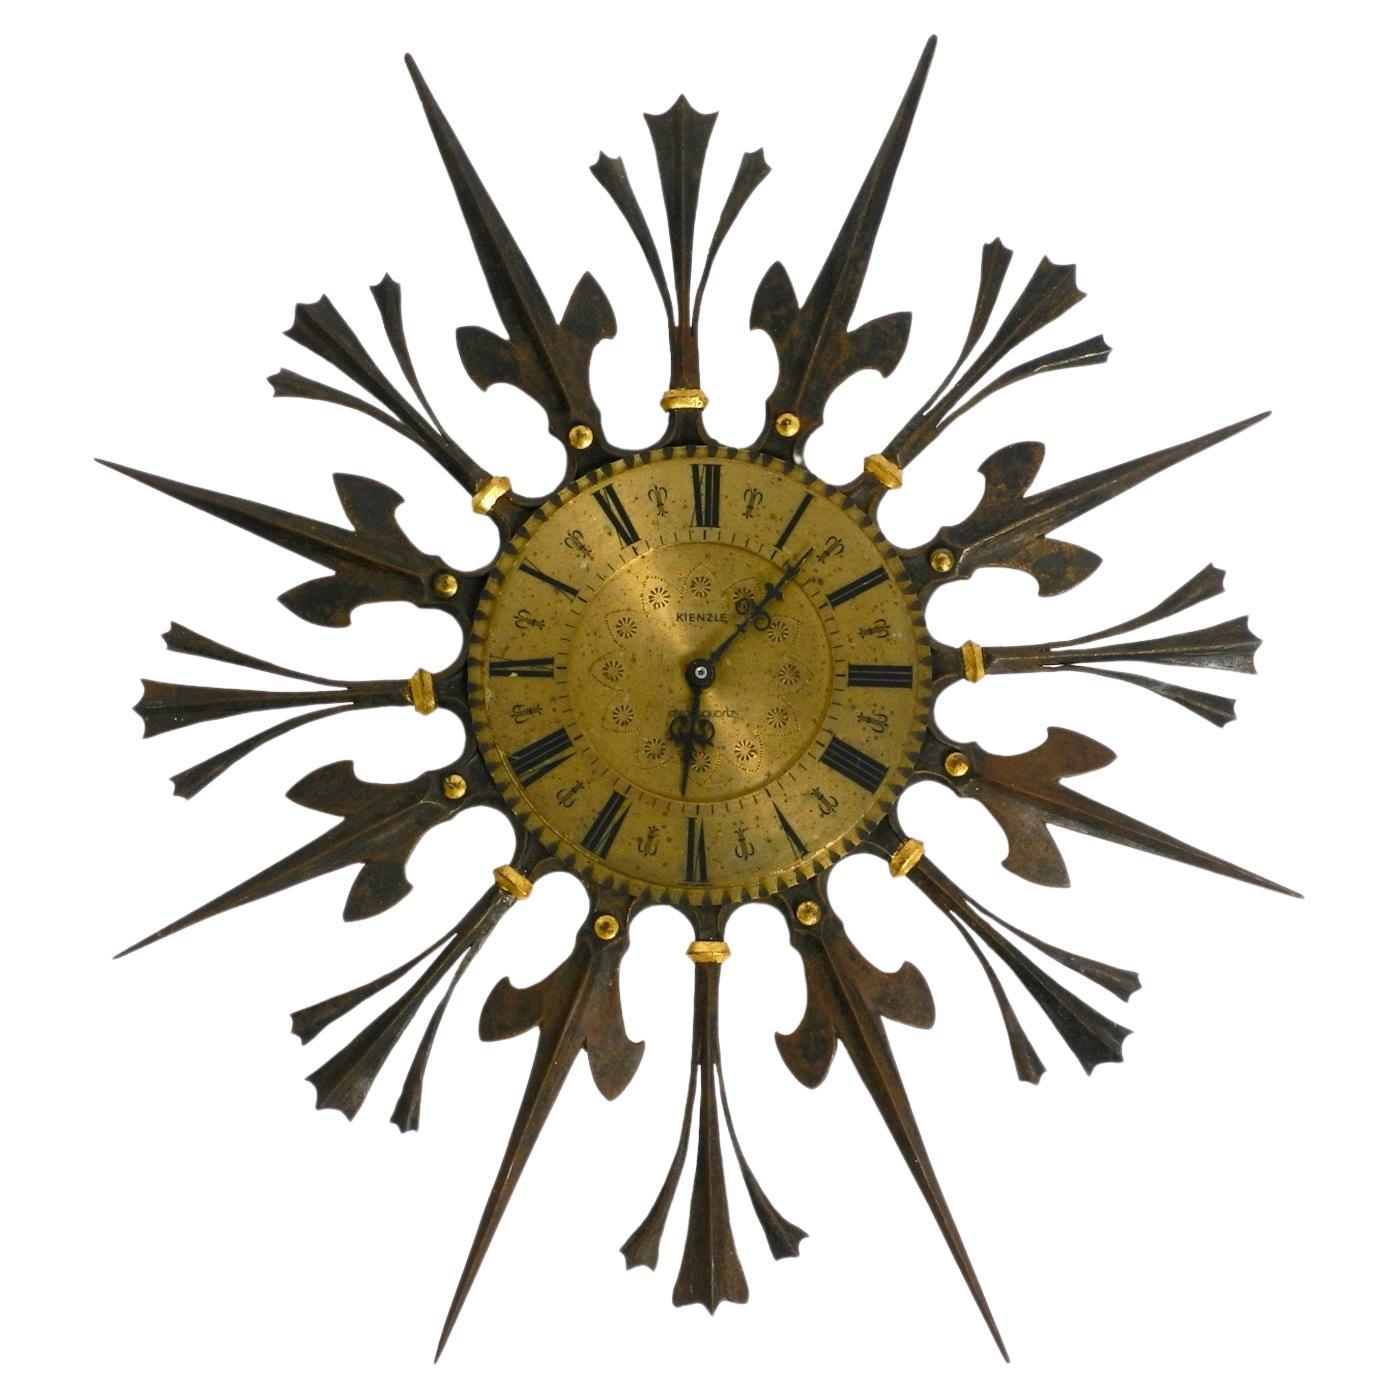 Huge, Heavy, Unusual 60s Sunburst Wall Clock Made of Wrought Iron by Kienzle